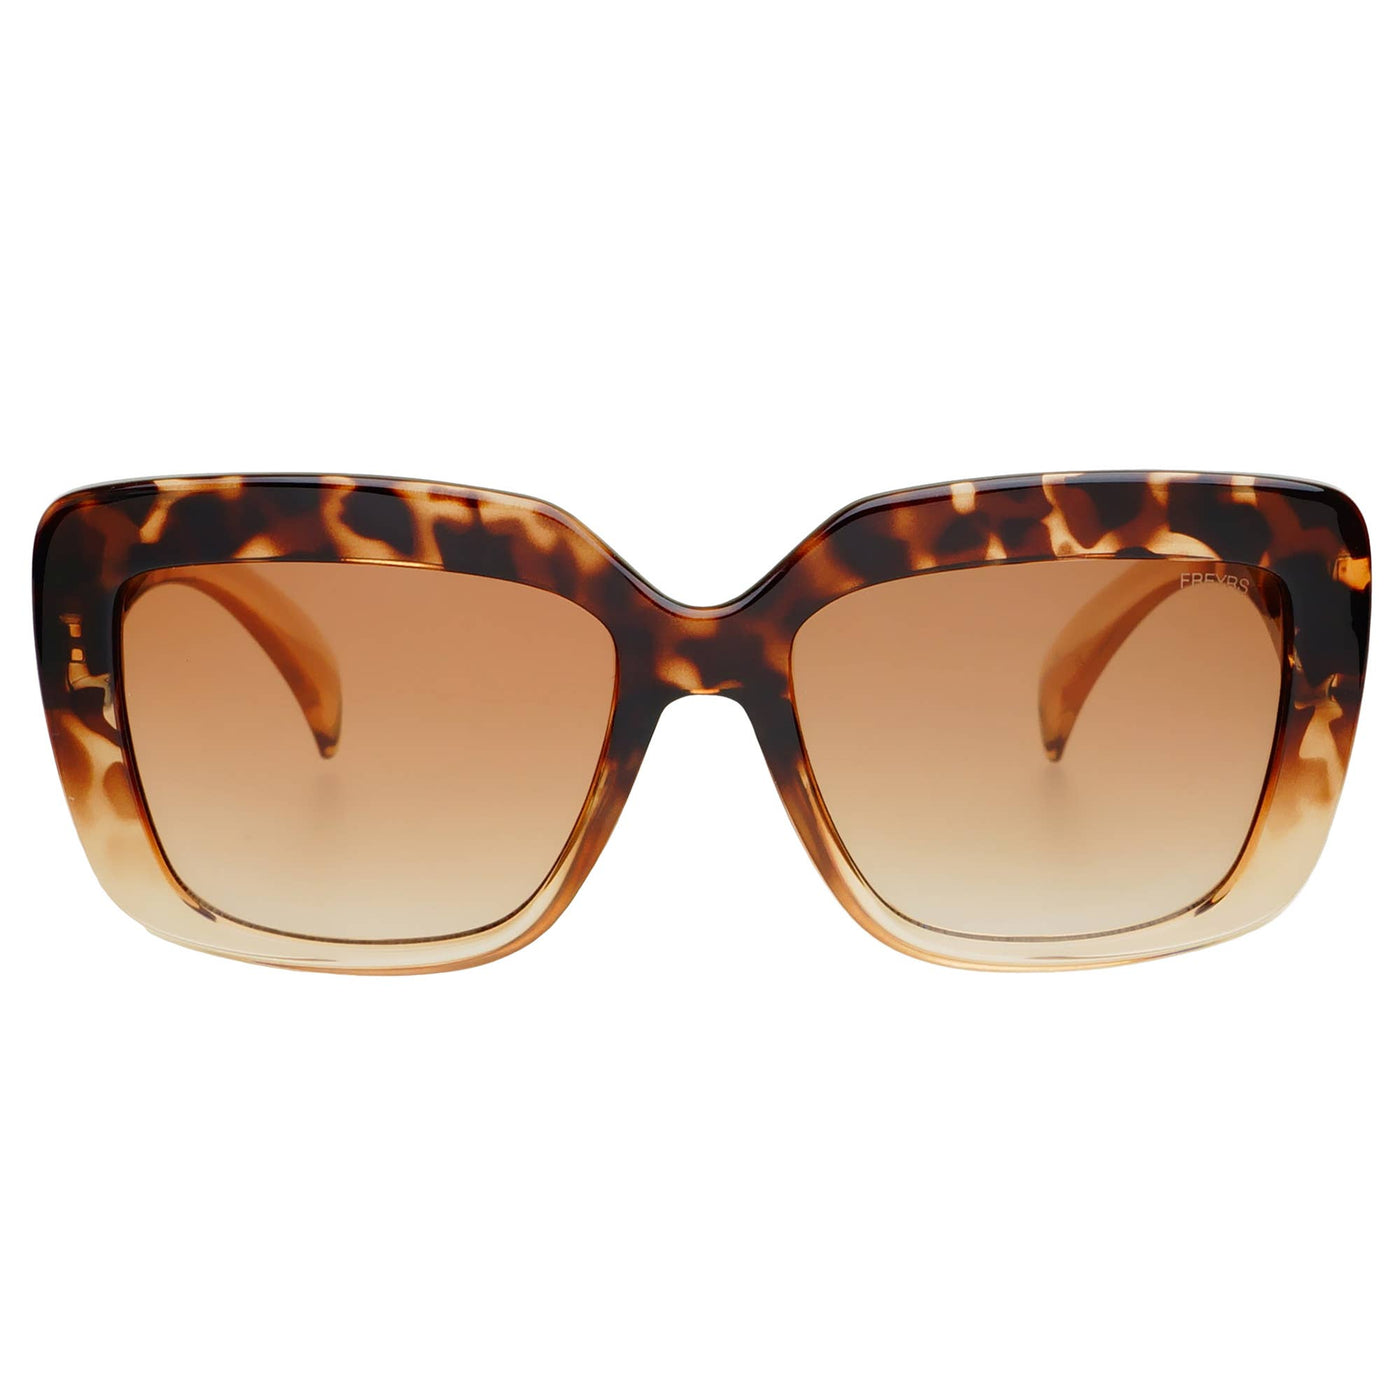 Tribeca Sunglasses Tortoise